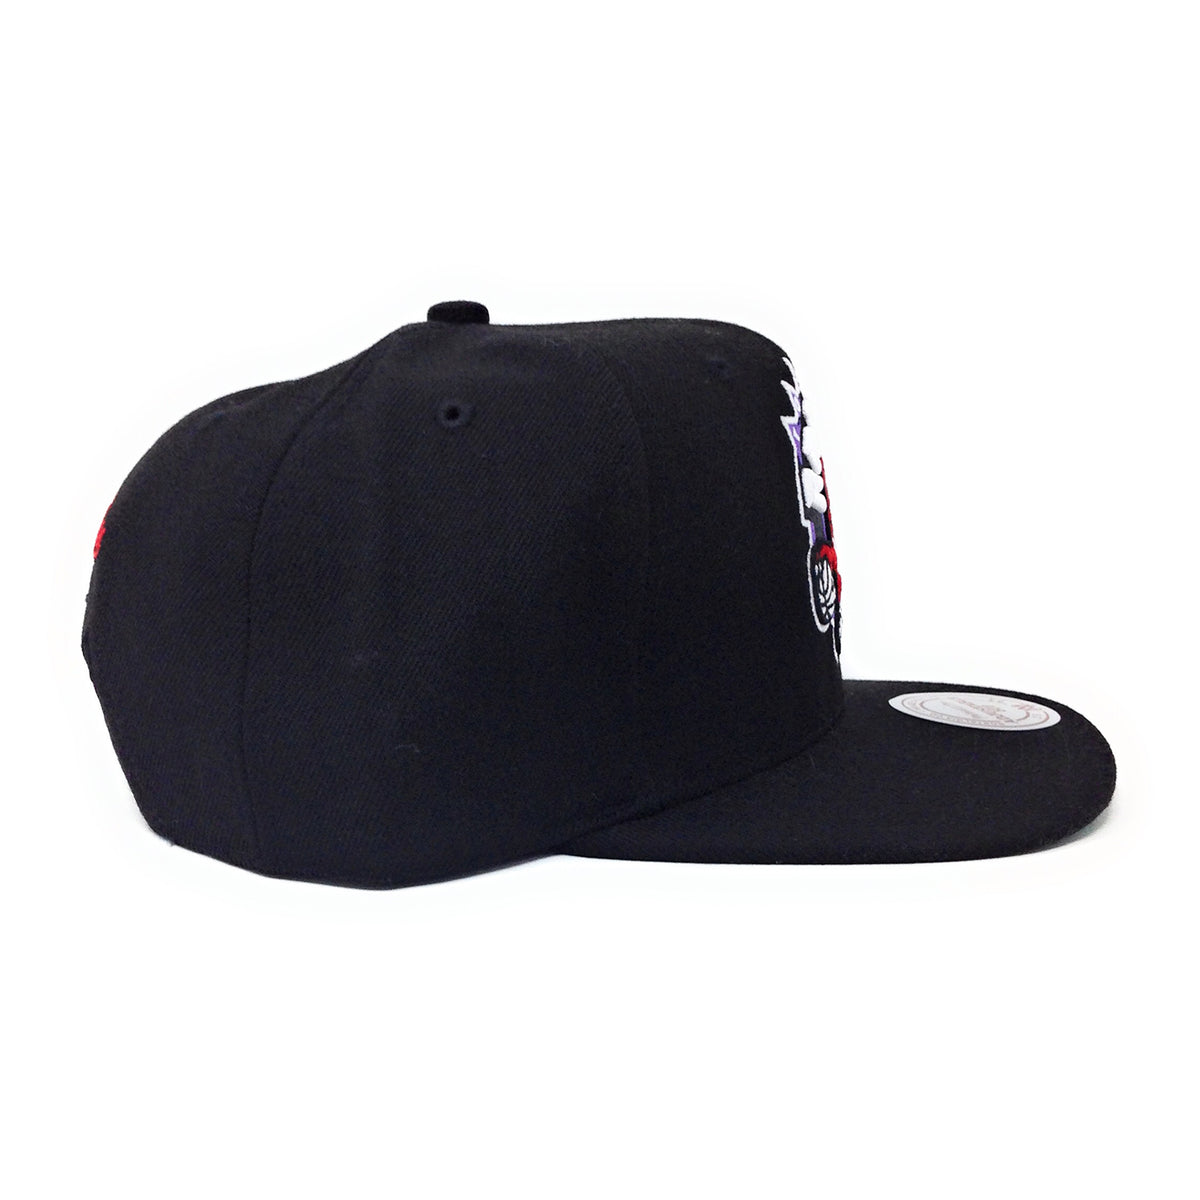 Men's Toronto Raptors Mitchell & Ness Black/Purple Upside Down Snapback Hat